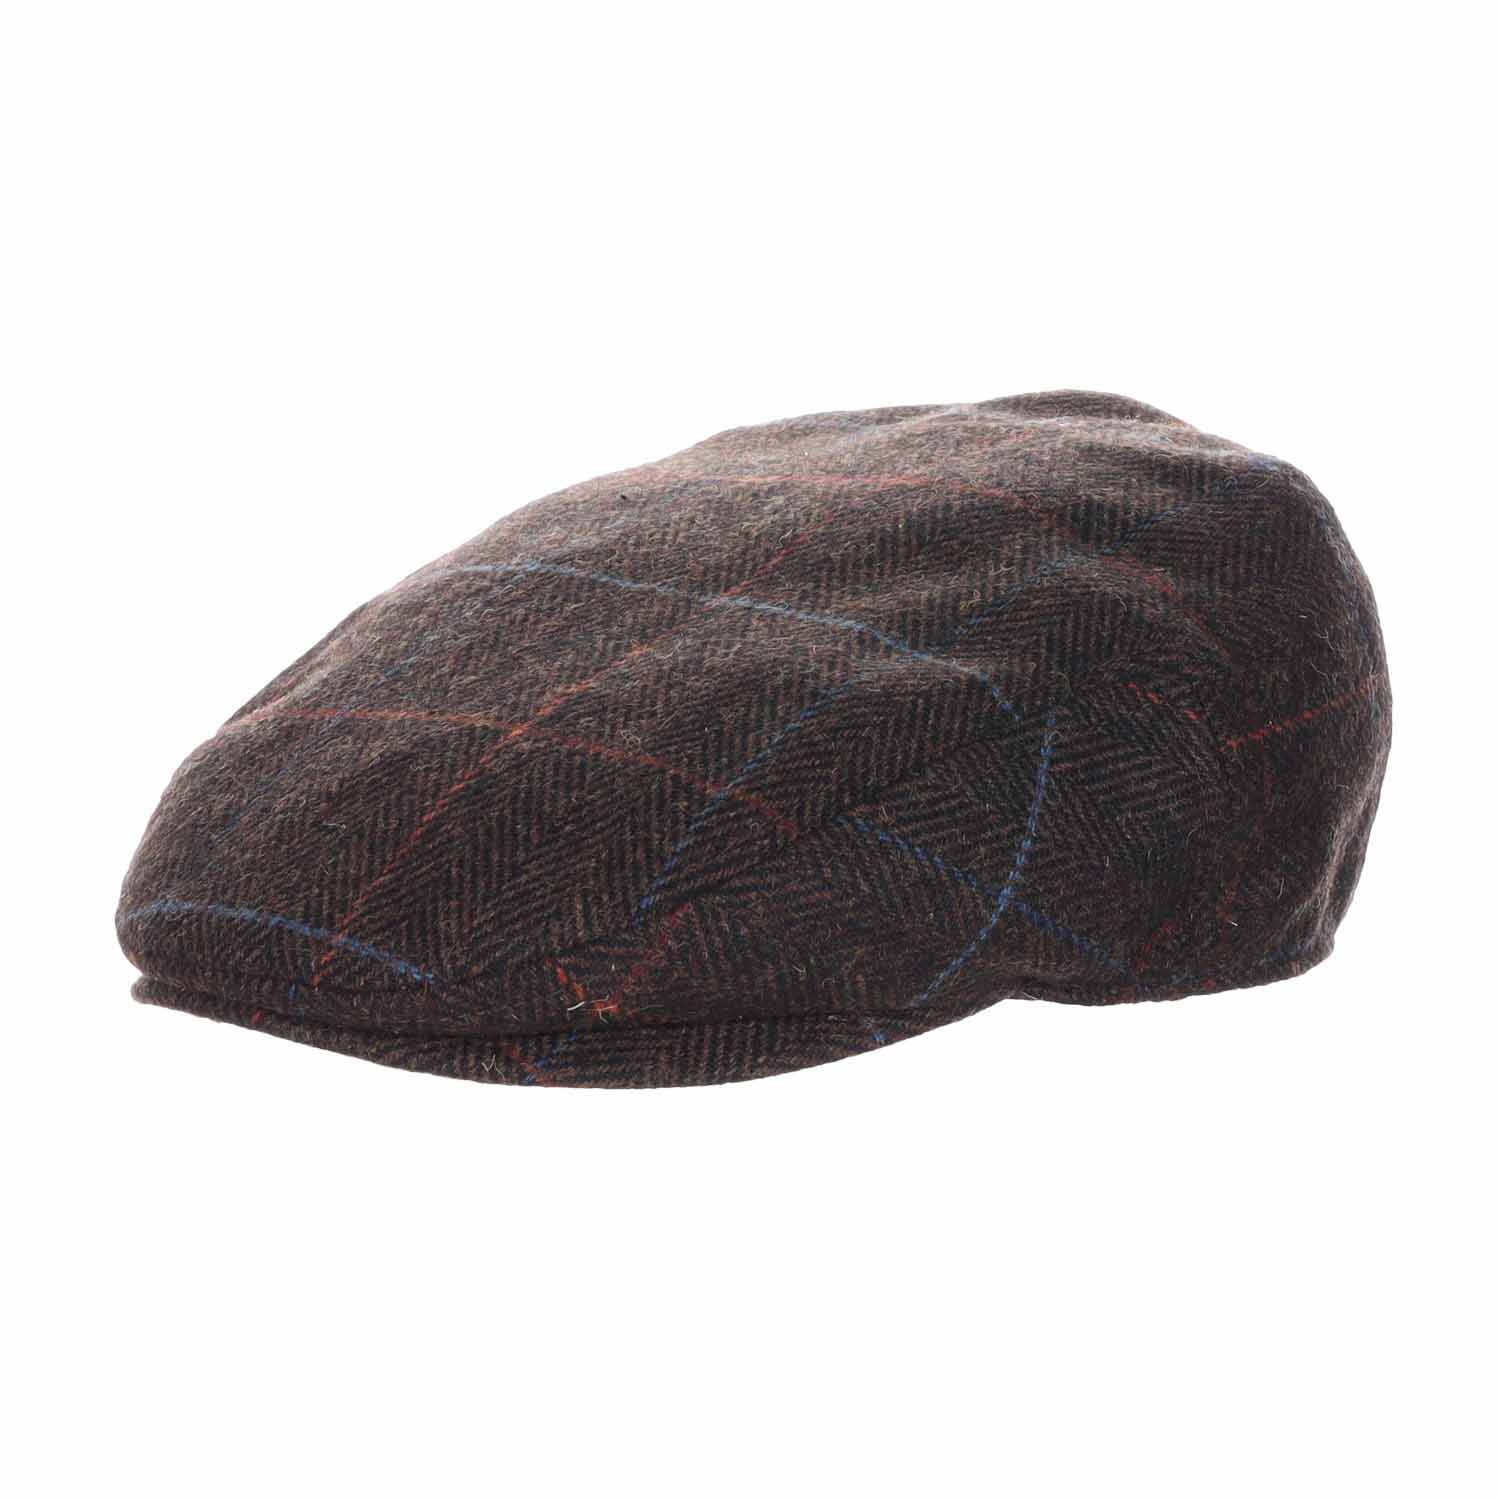 Gibson Wool Blend Herringbone Ivy Cap - Dorfman Hat Flat Cap Dorfman Hat Co. MW367-BROWN3 Brown Large 